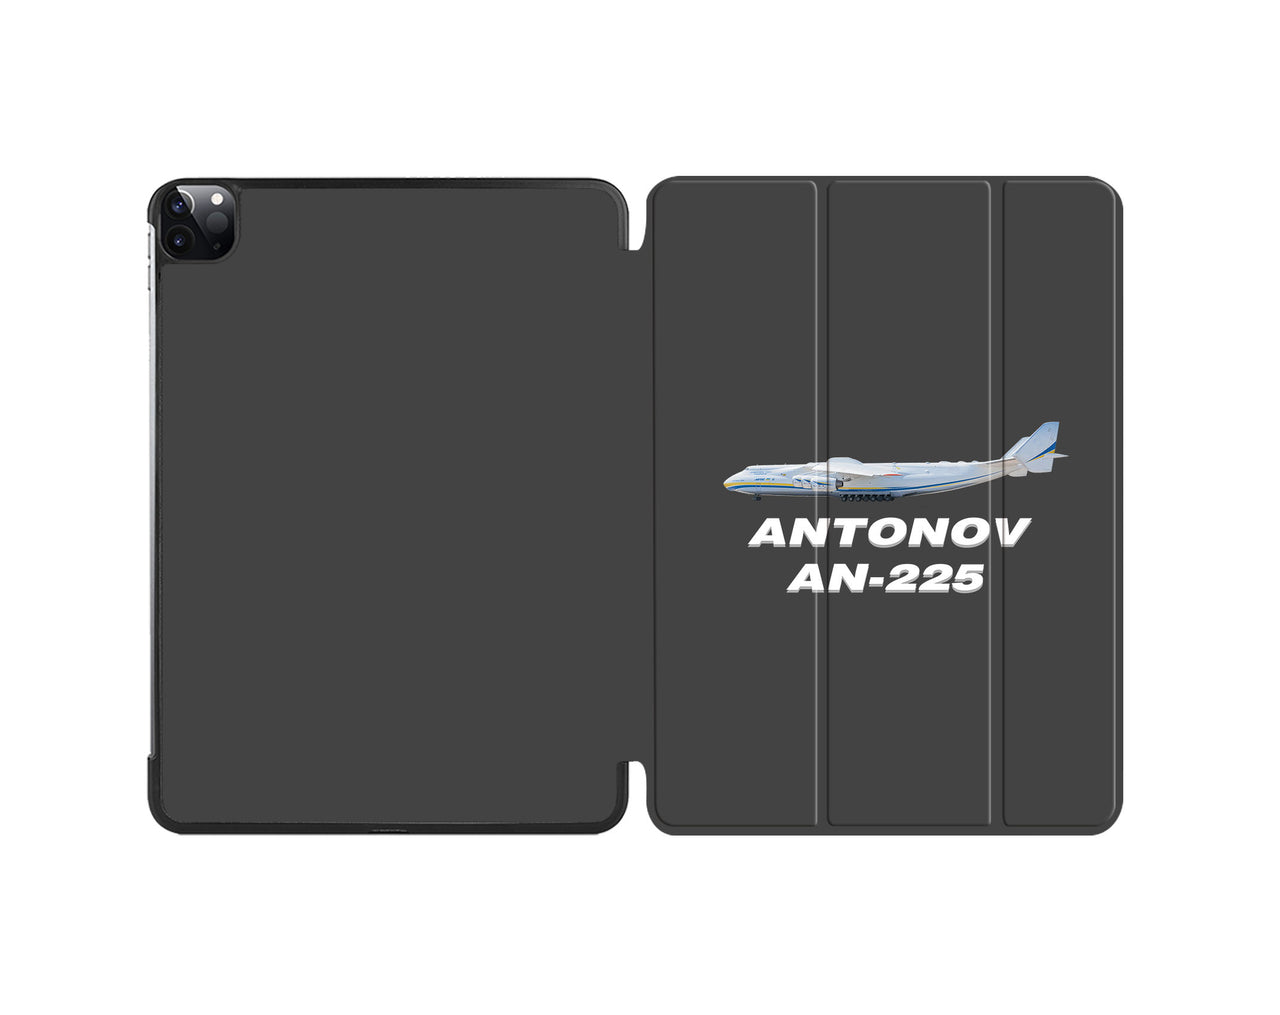 The Antonov AN-225 Designed iPad Cases